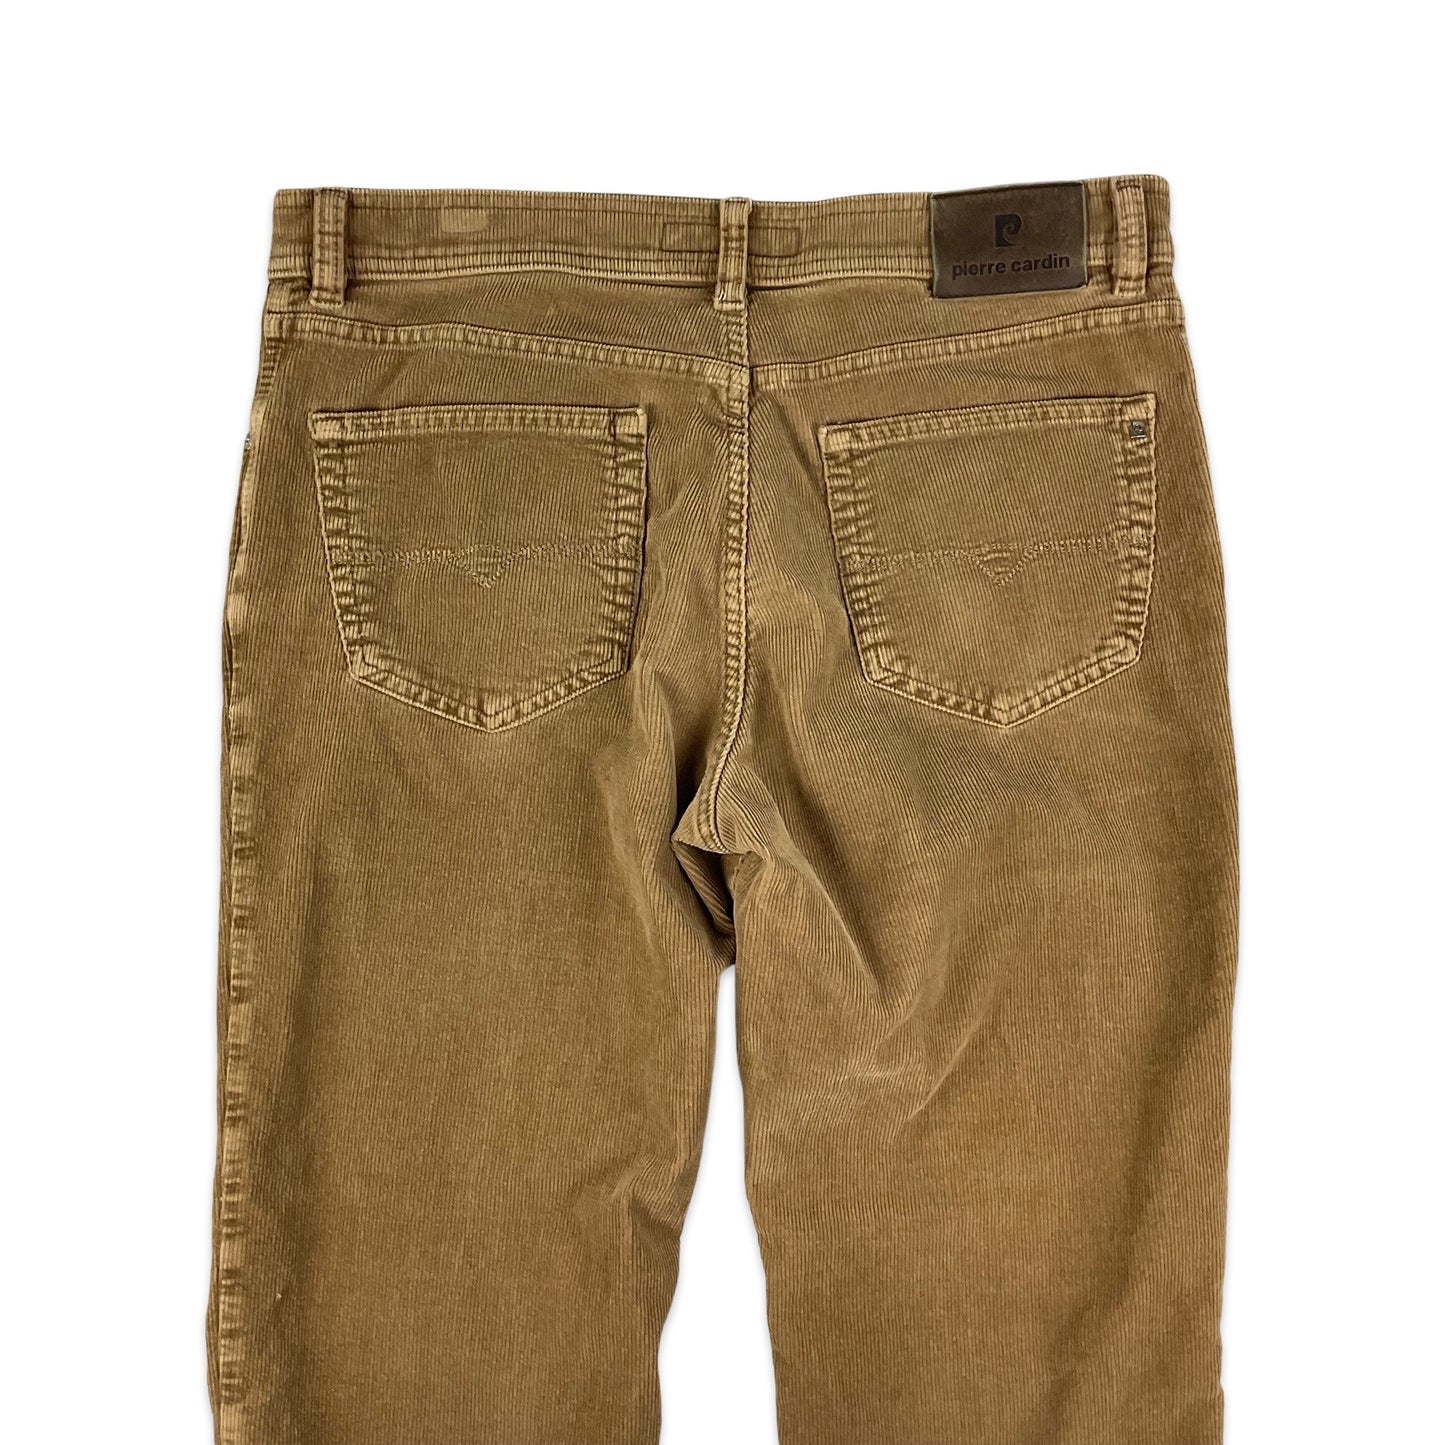 Vintage Pierre Cardin Brown Corduroy Trousers 37W 28L